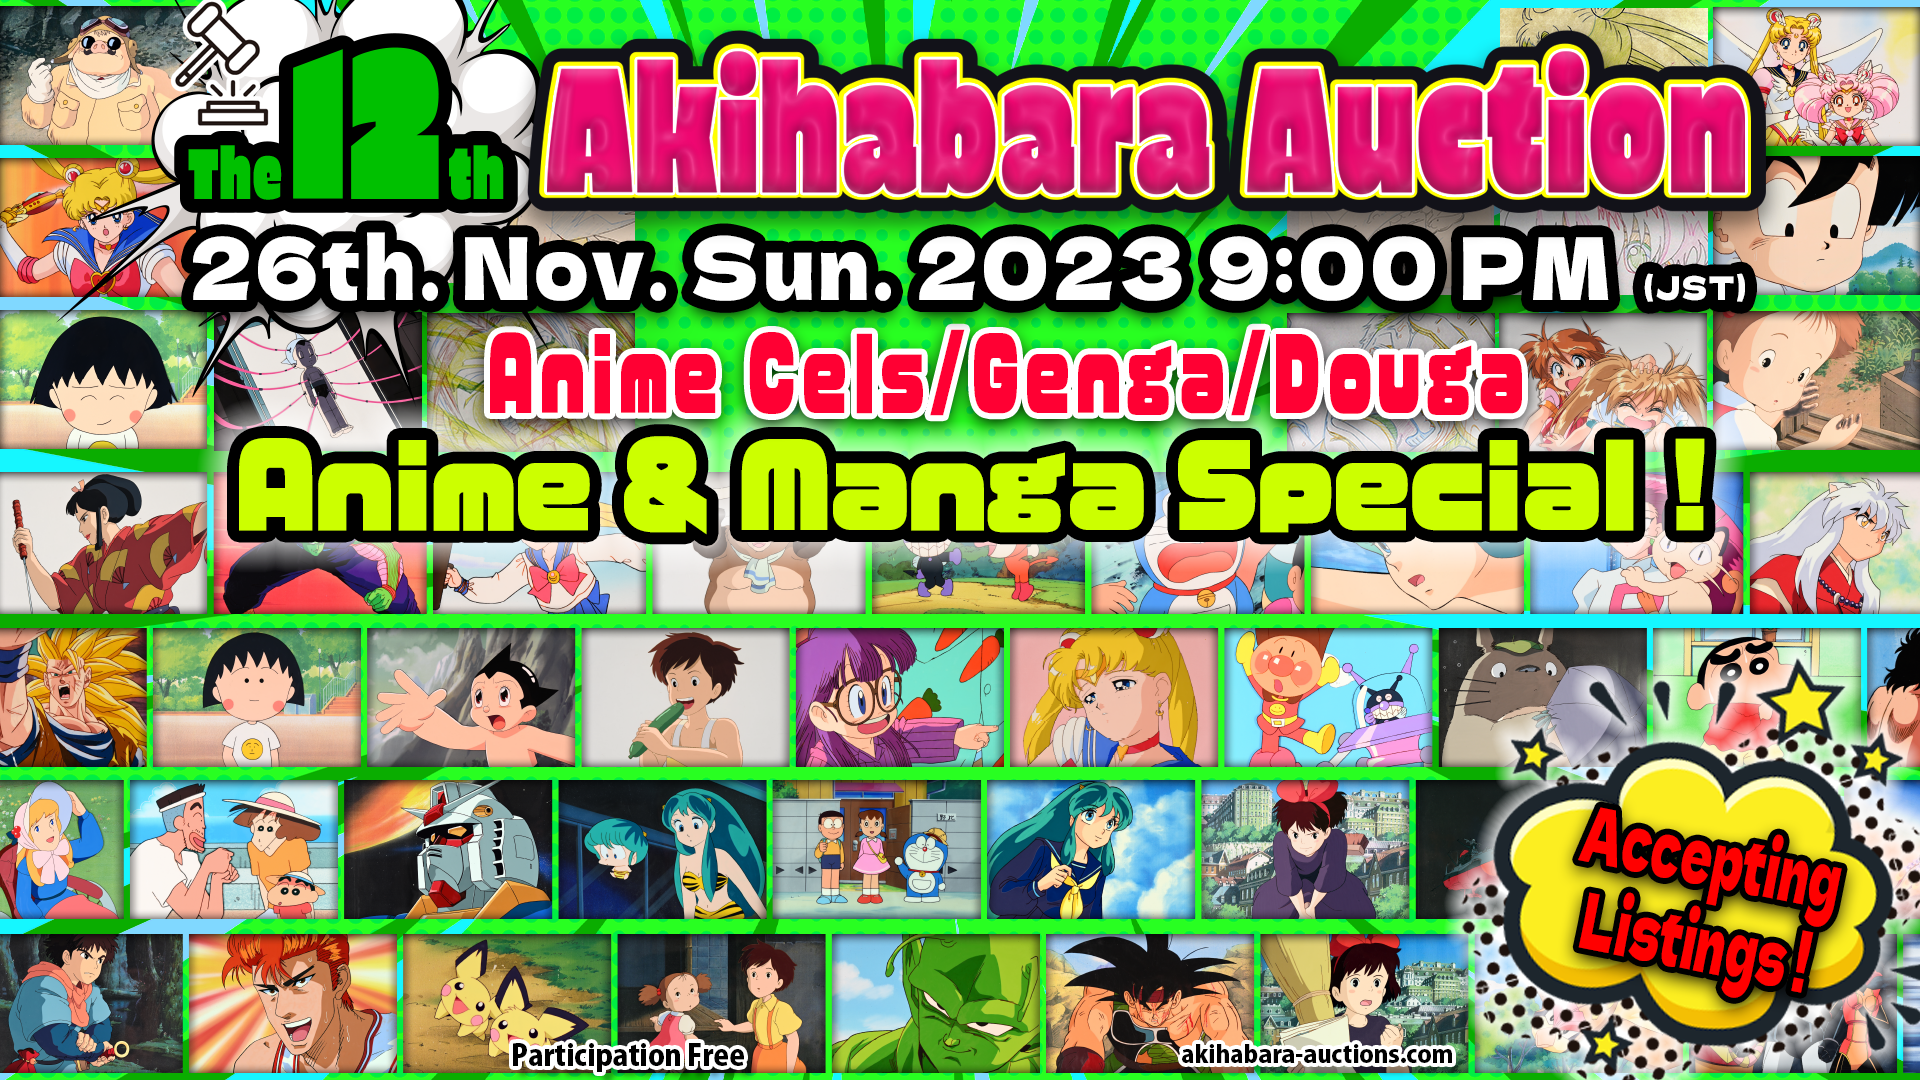 The 11th Akihabara Auction "Anime Cels/Genga/Douga" Anime & Manga Special